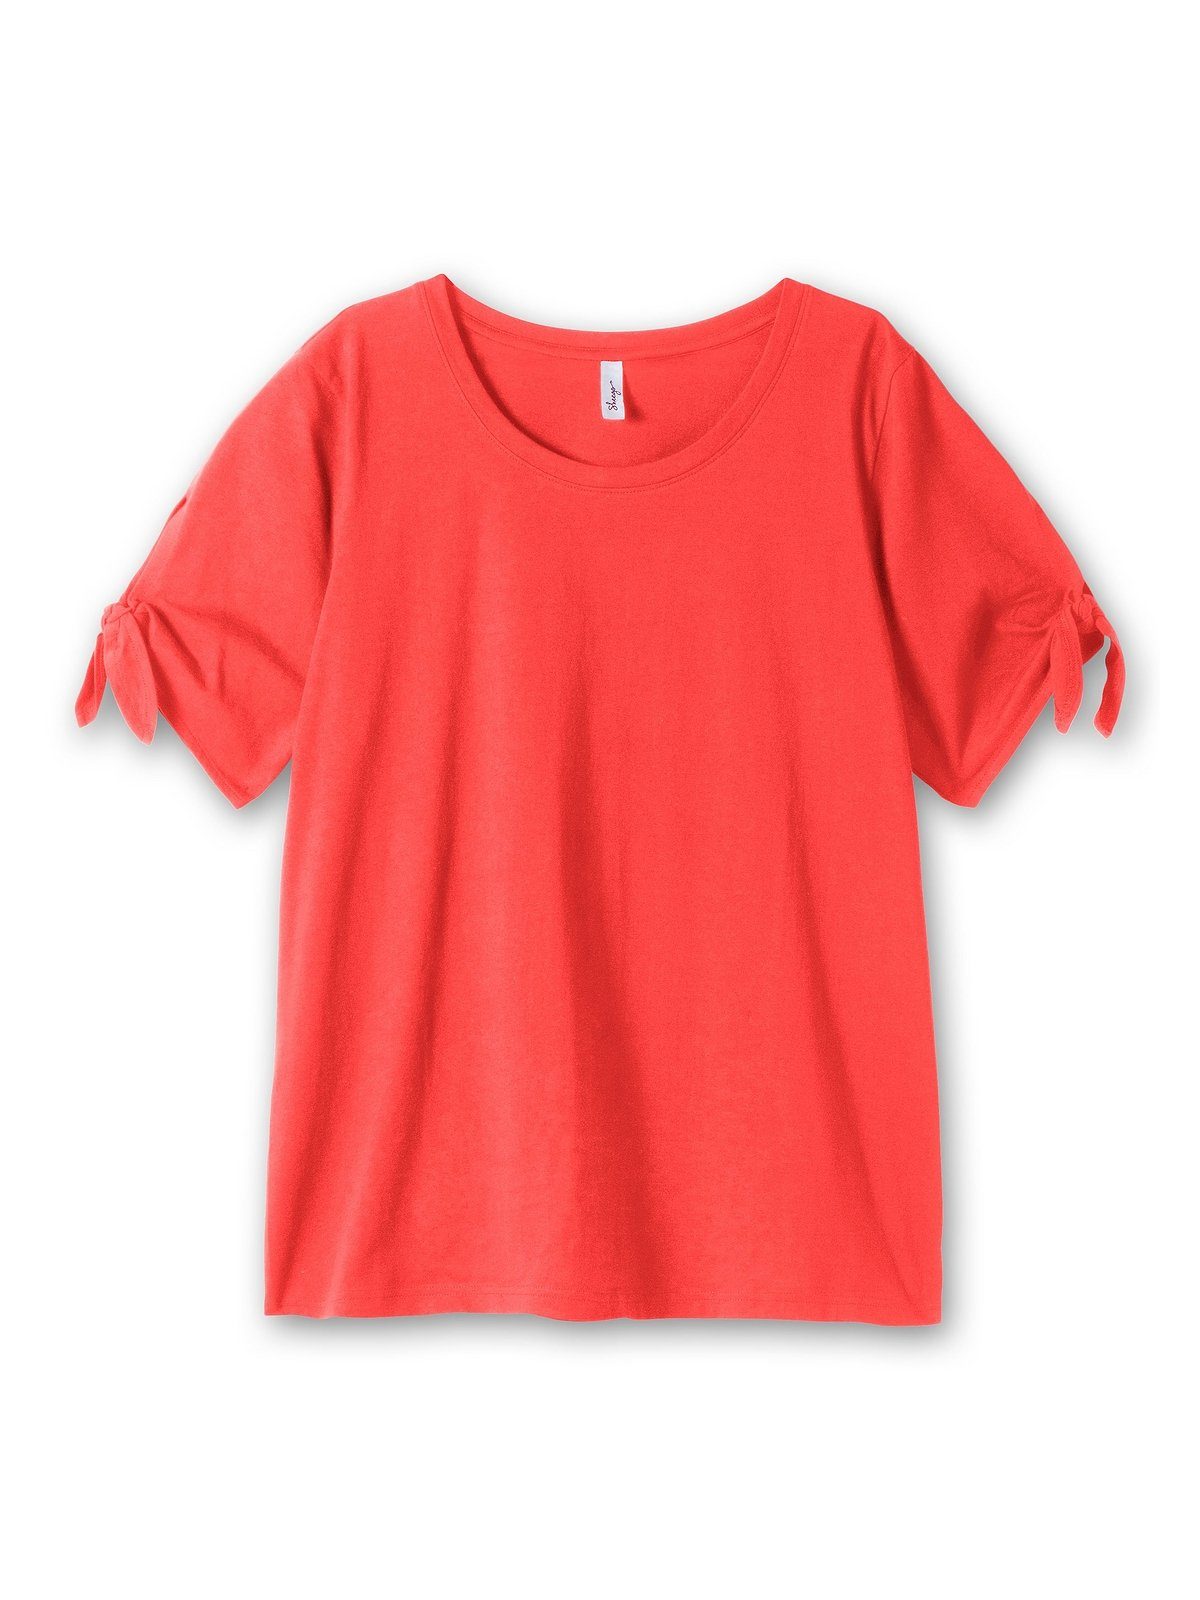 am Sheego Große rot mit Knotendetail Größen T-Shirt Ärmelsaum